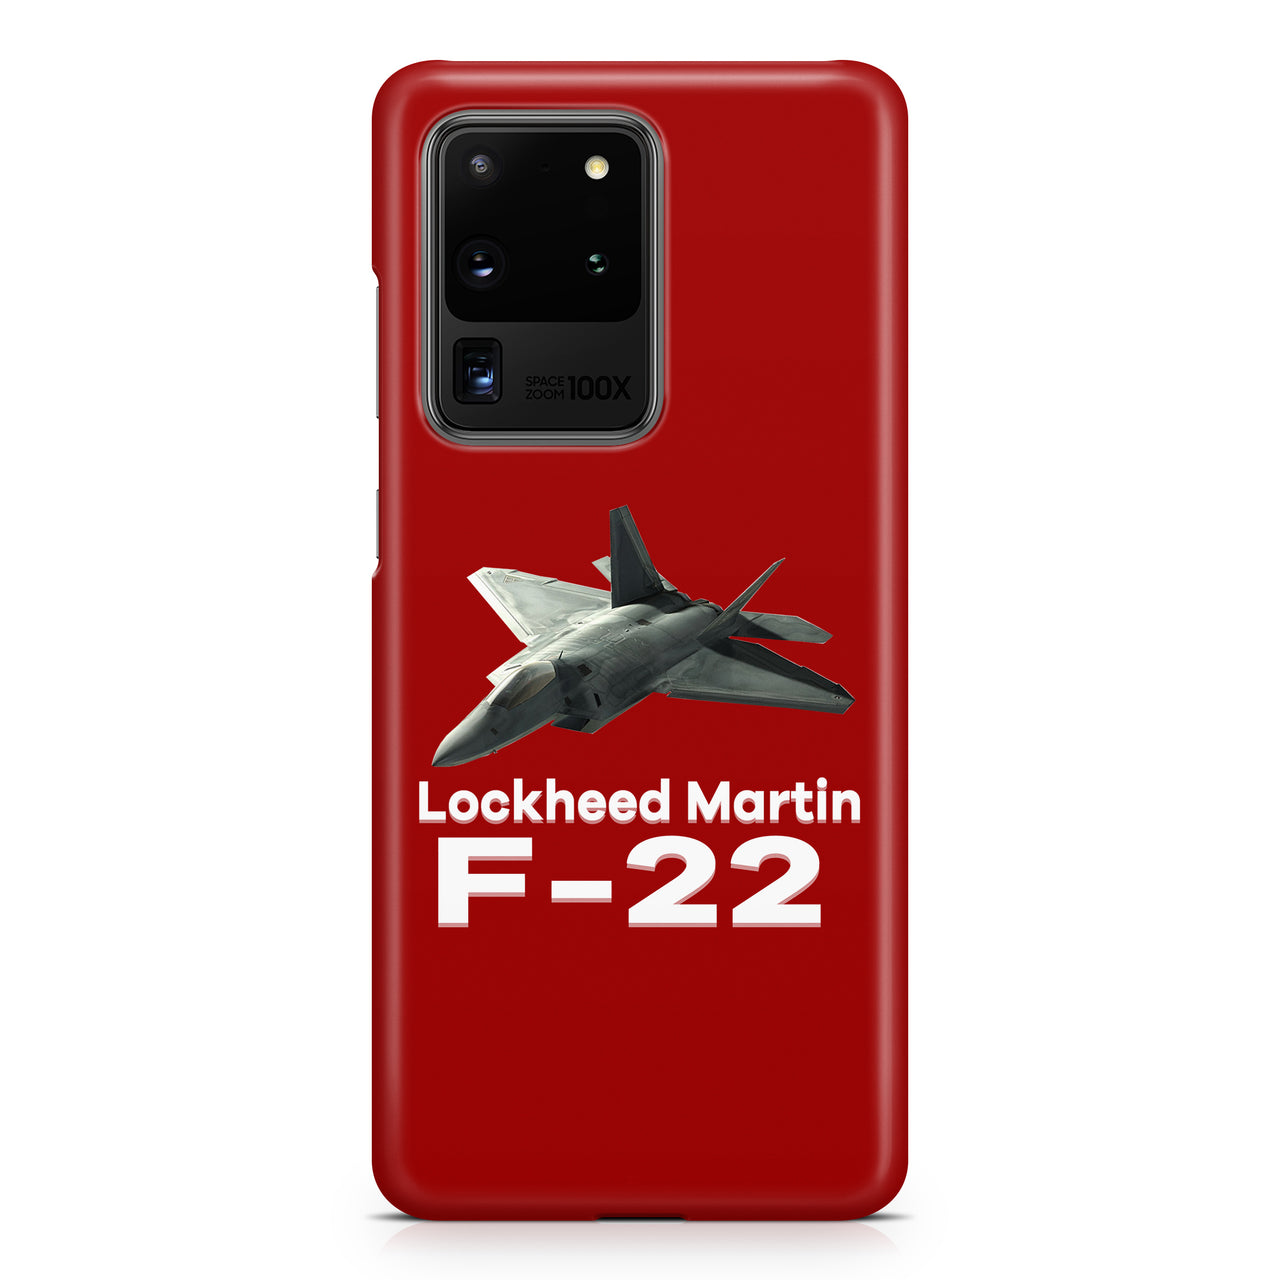 The Lockheed Martin F22 Samsung A Cases